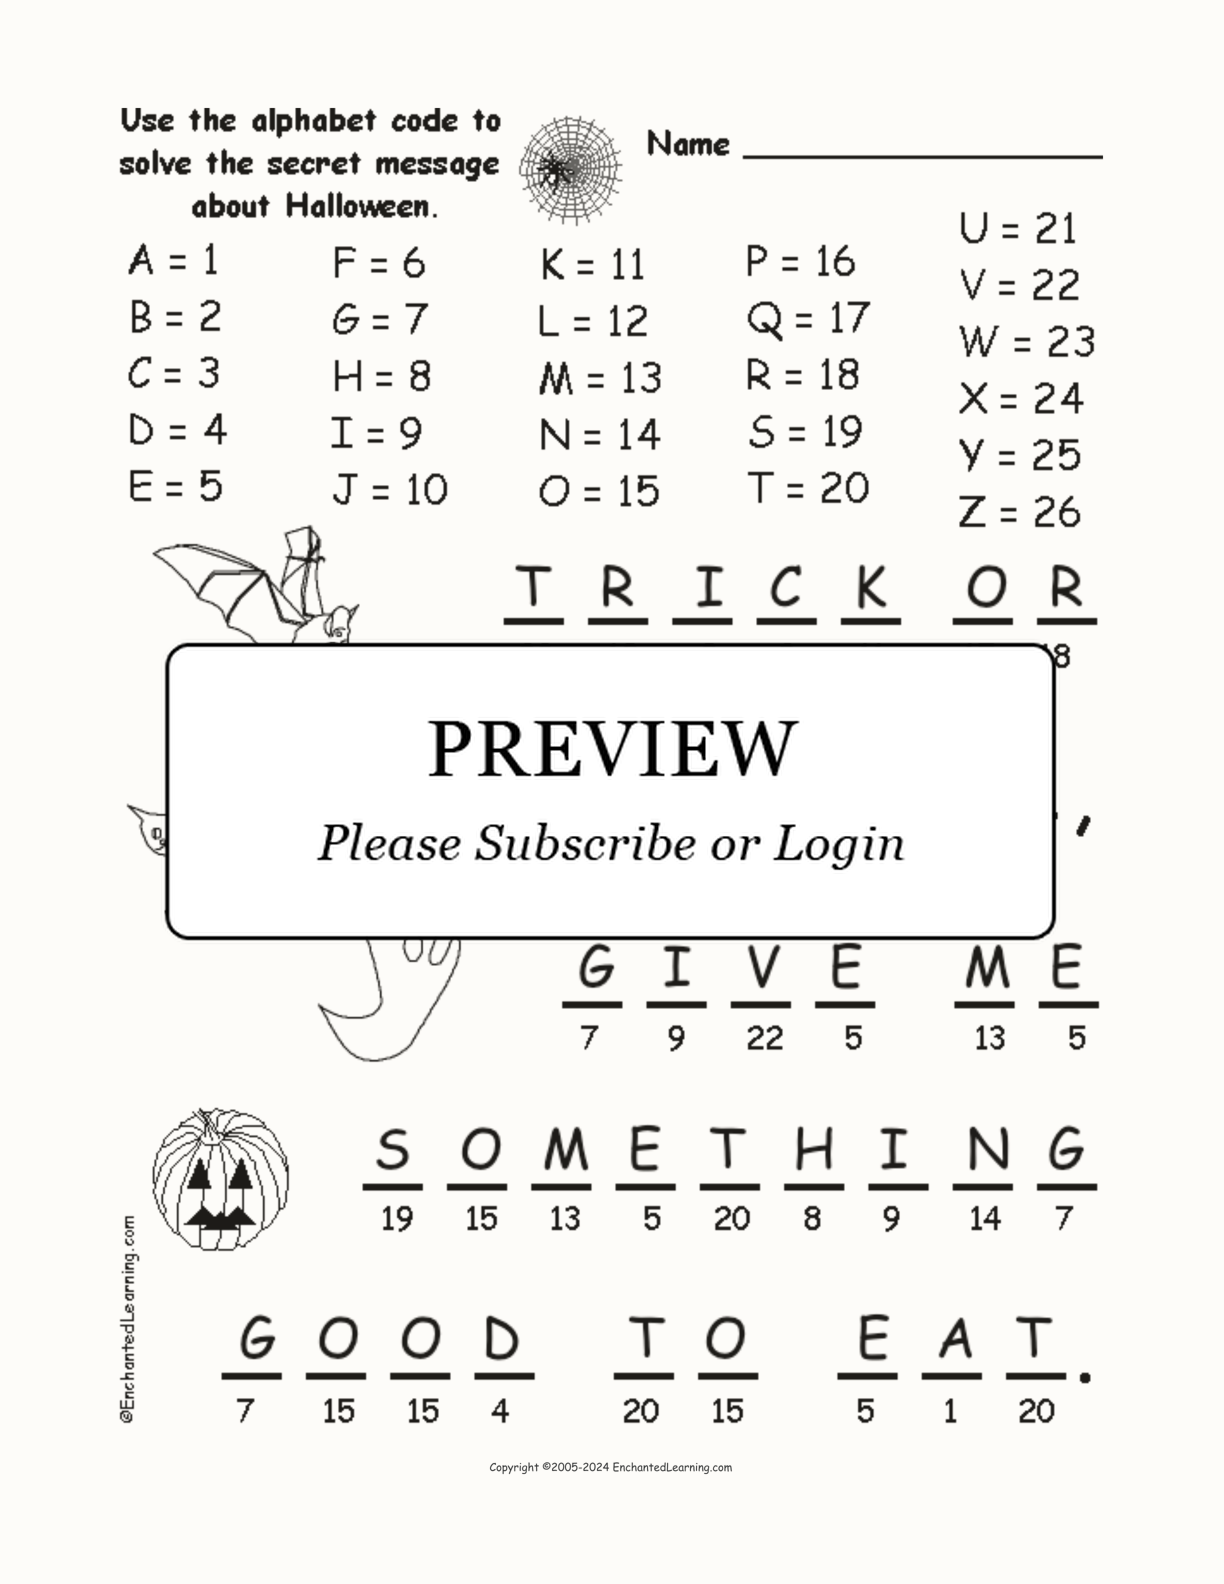 Halloween Alphabet Code interactive worksheet page 2